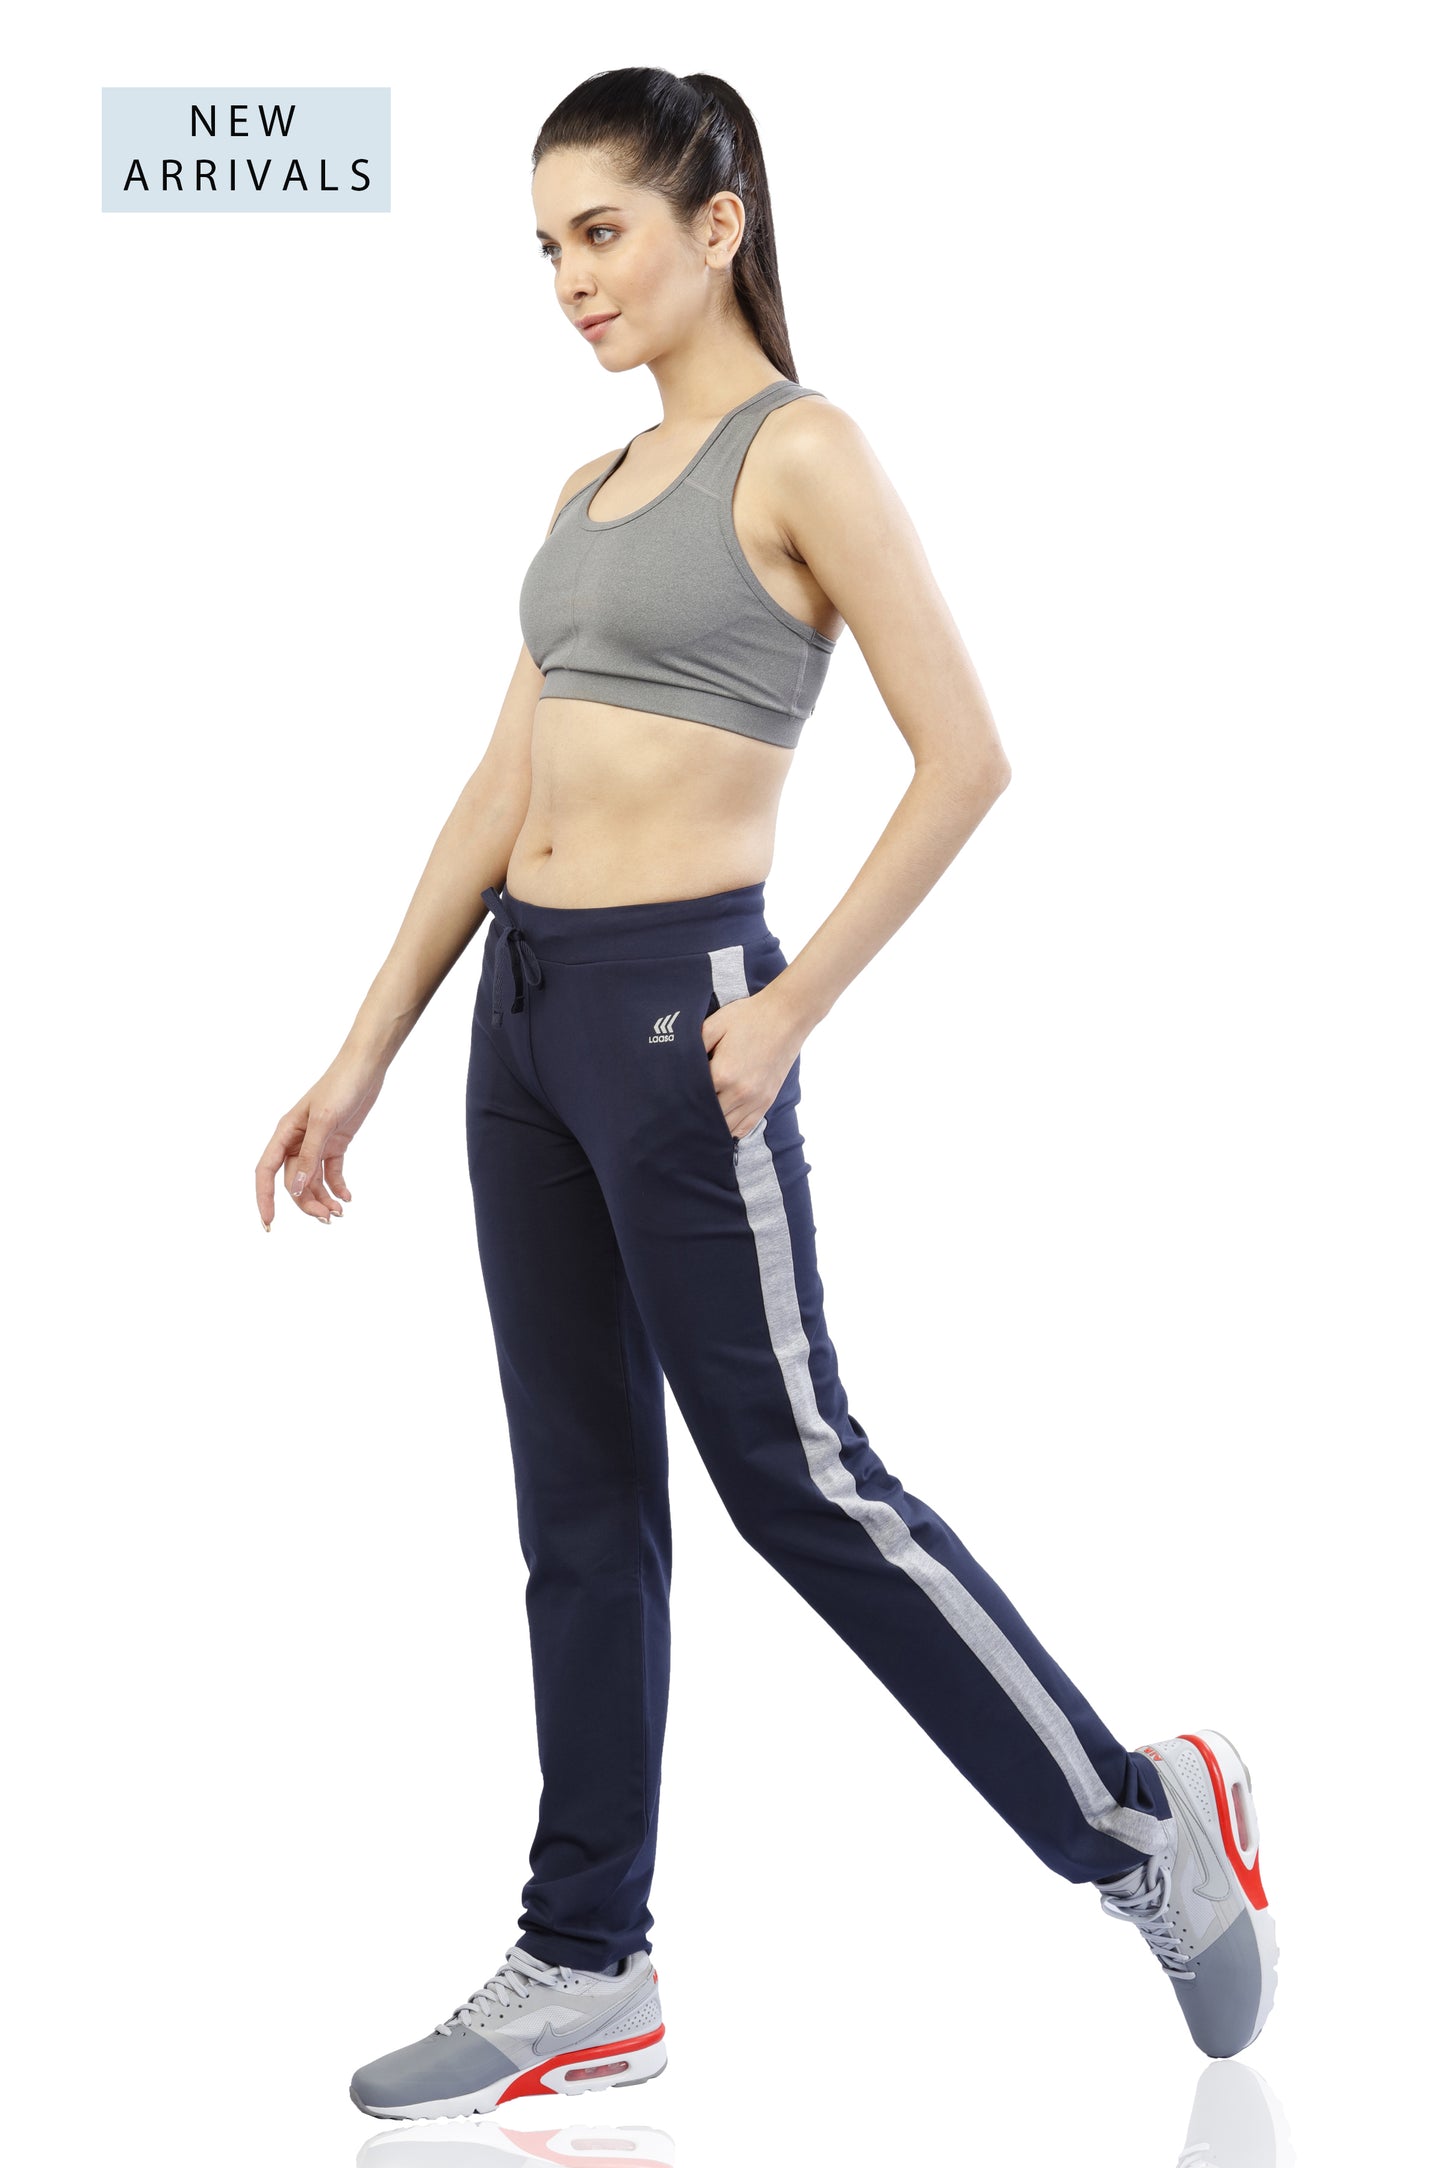 Laasa Sports  Women's Plus Size Cotton Track Pants